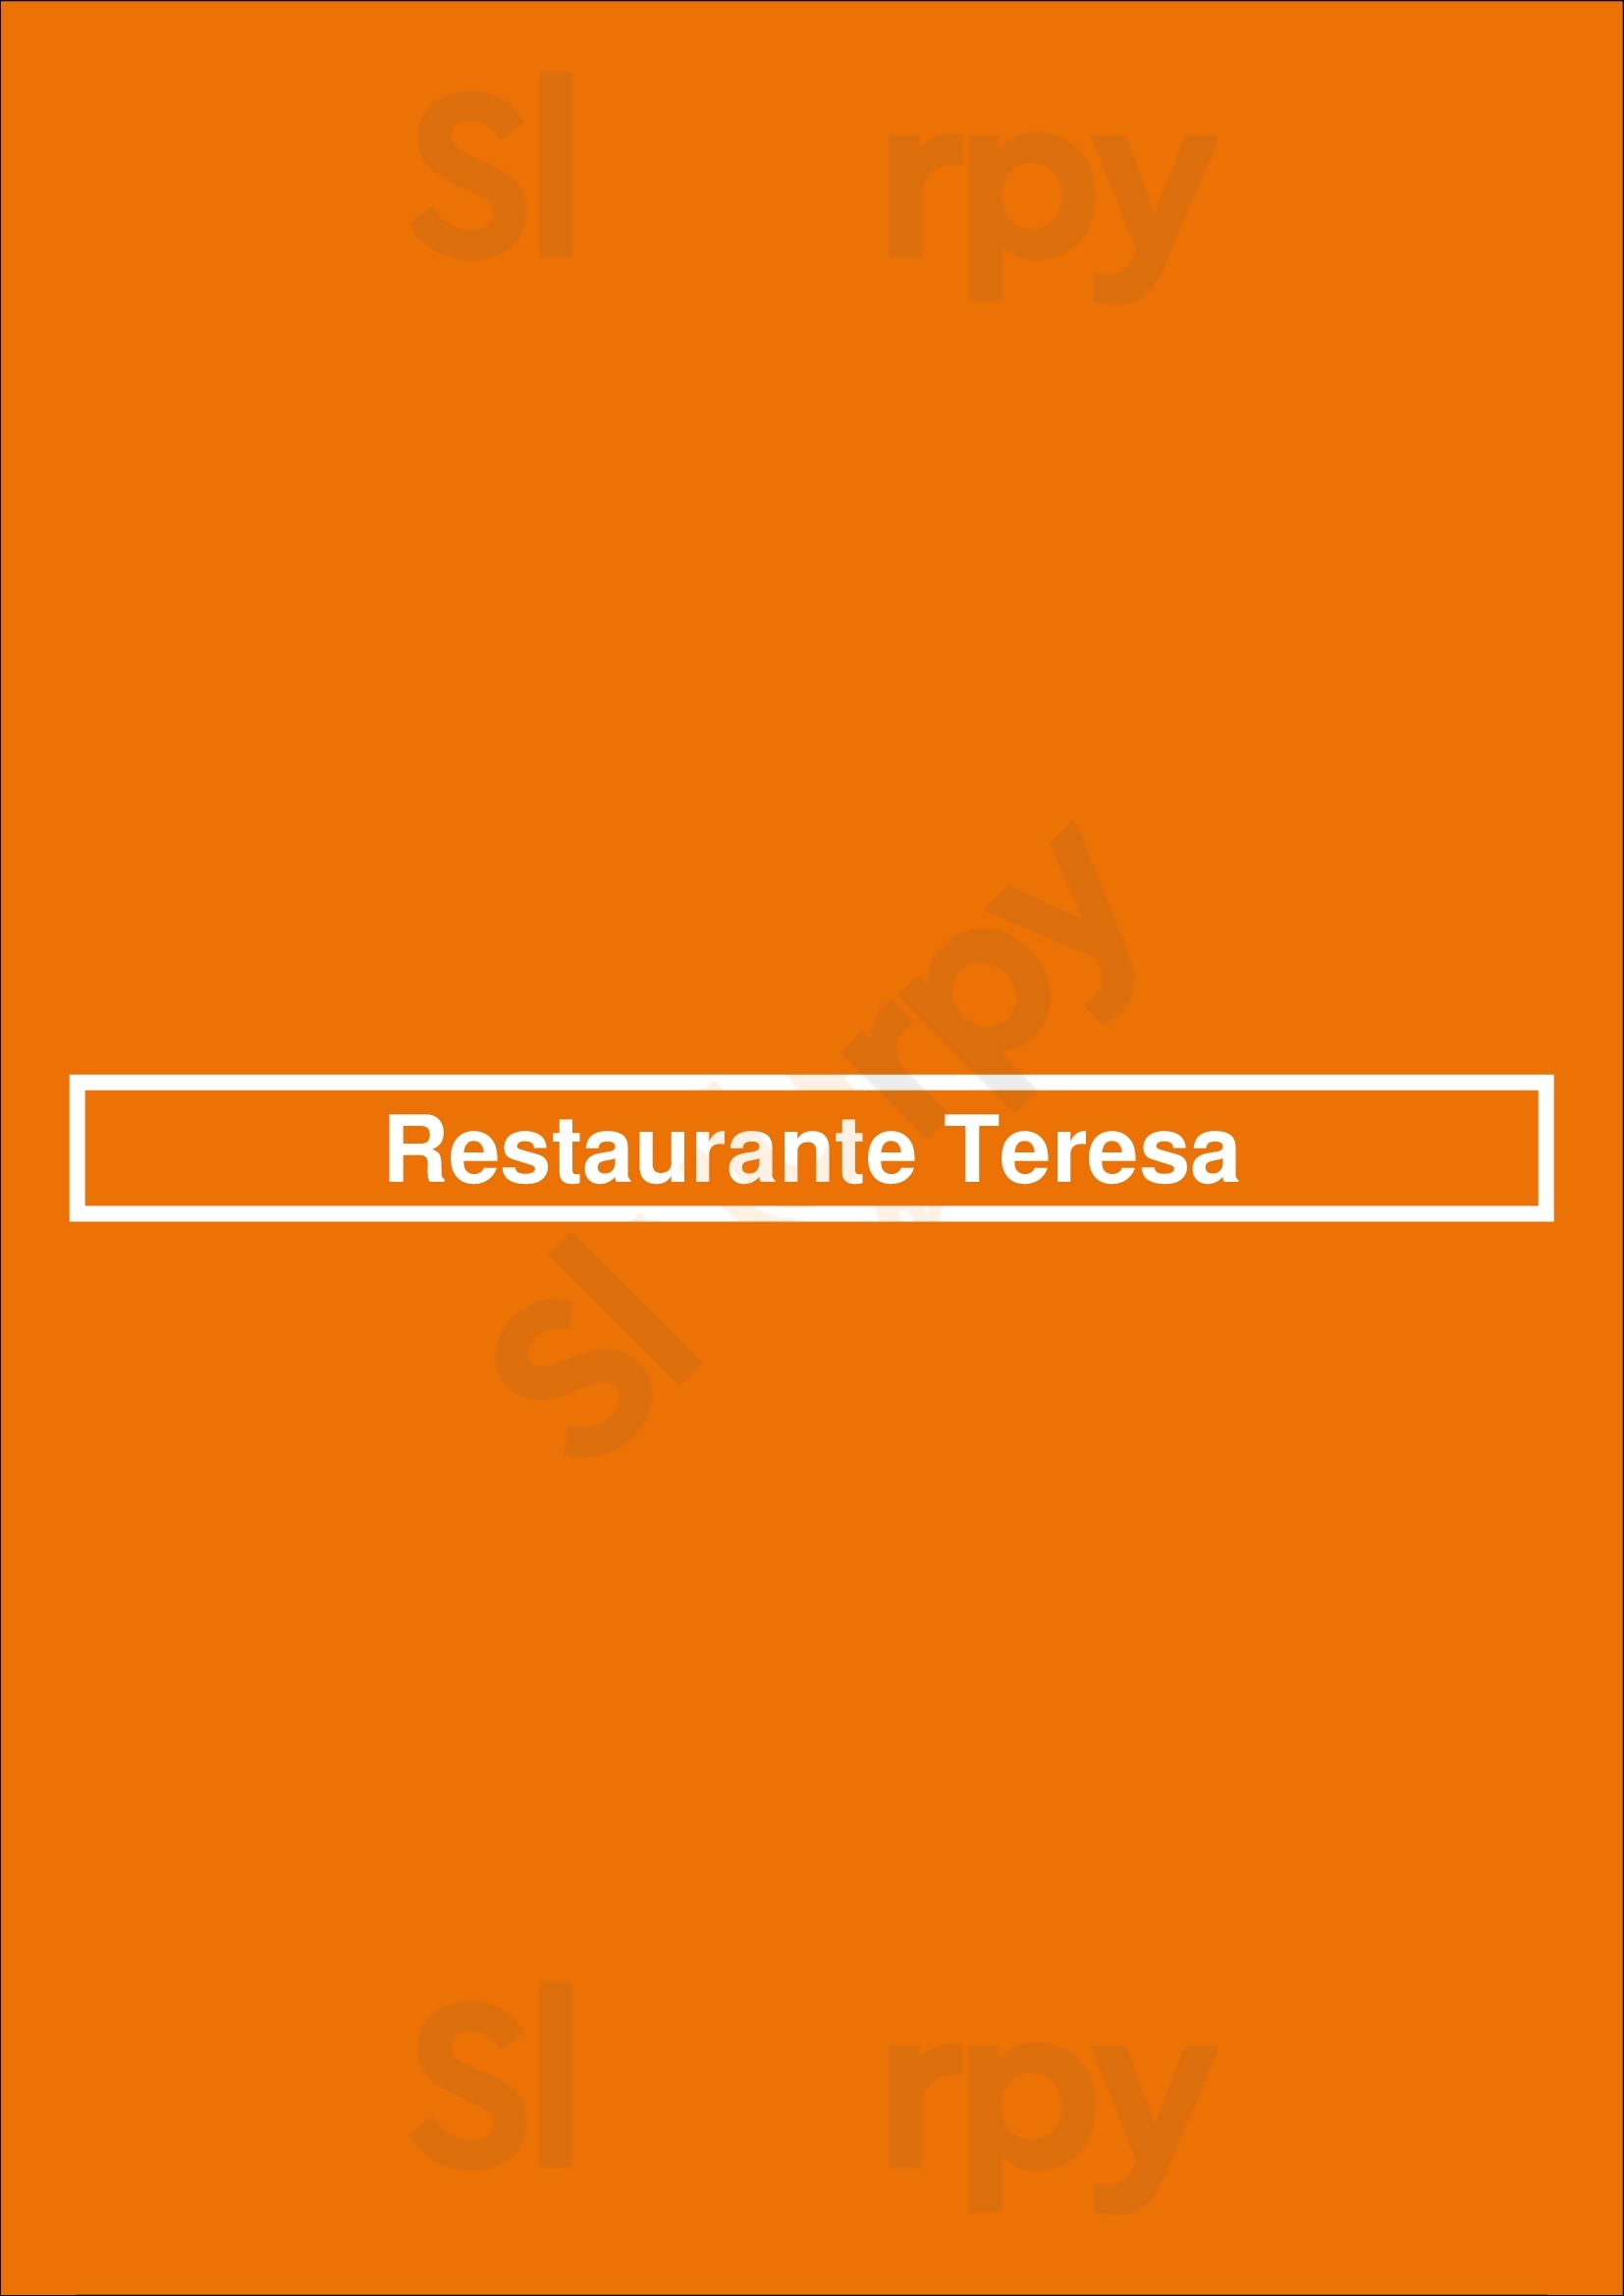 Restaurante Teresa Matosinhos Menu - 1